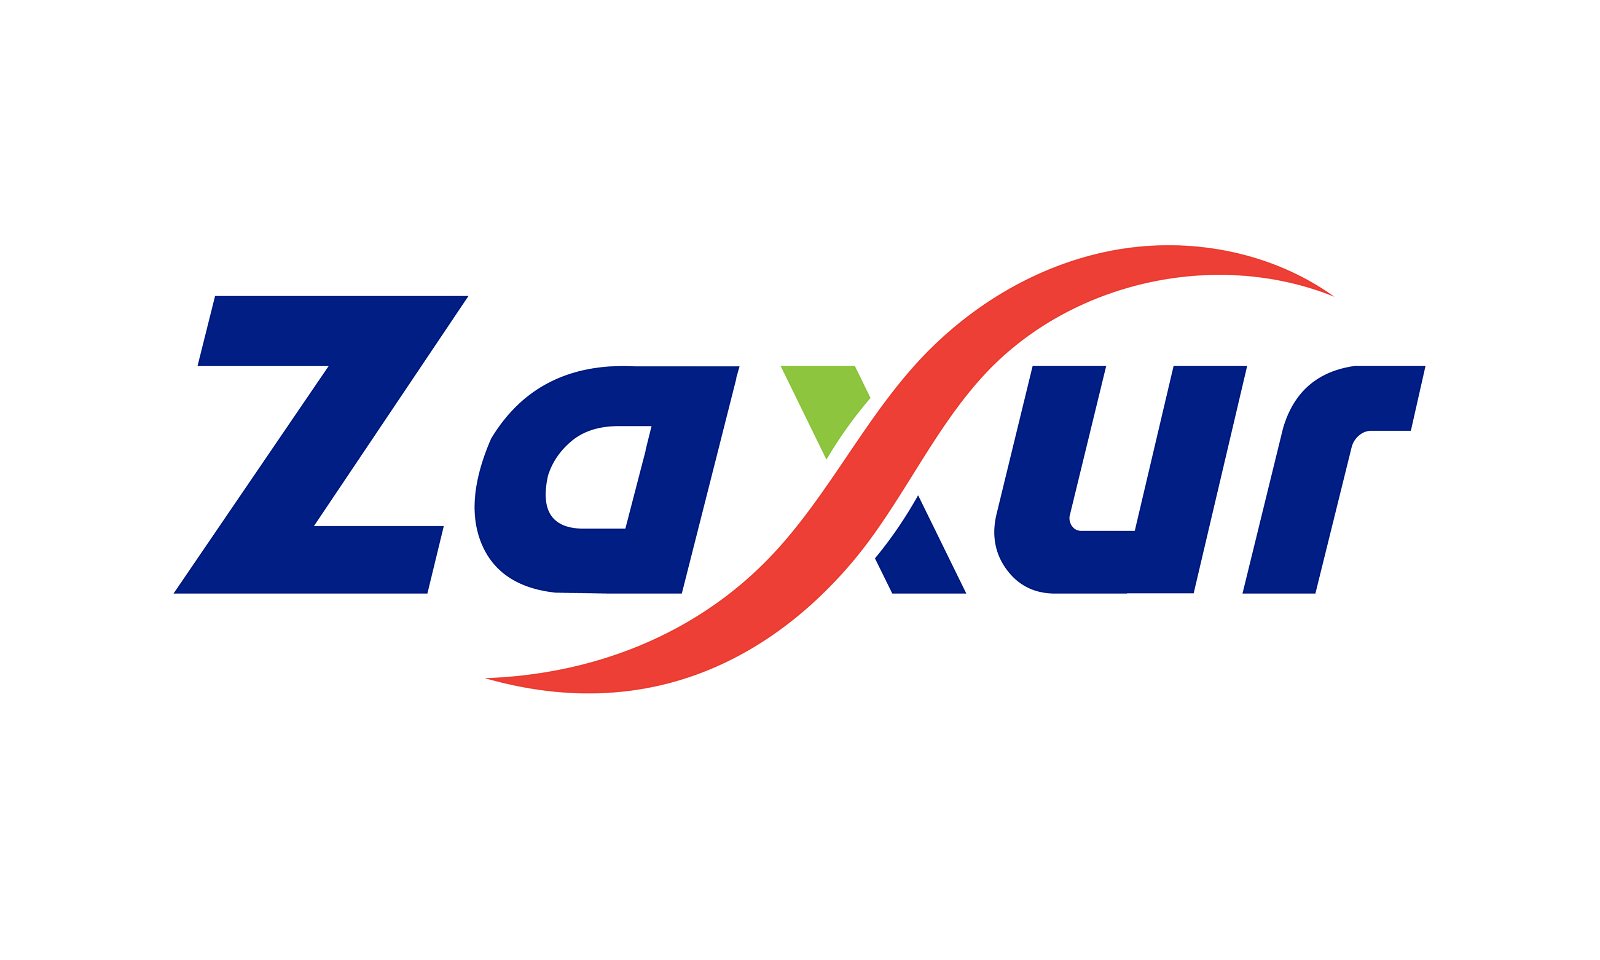 Zaxur.com - Creative brandable domain for sale